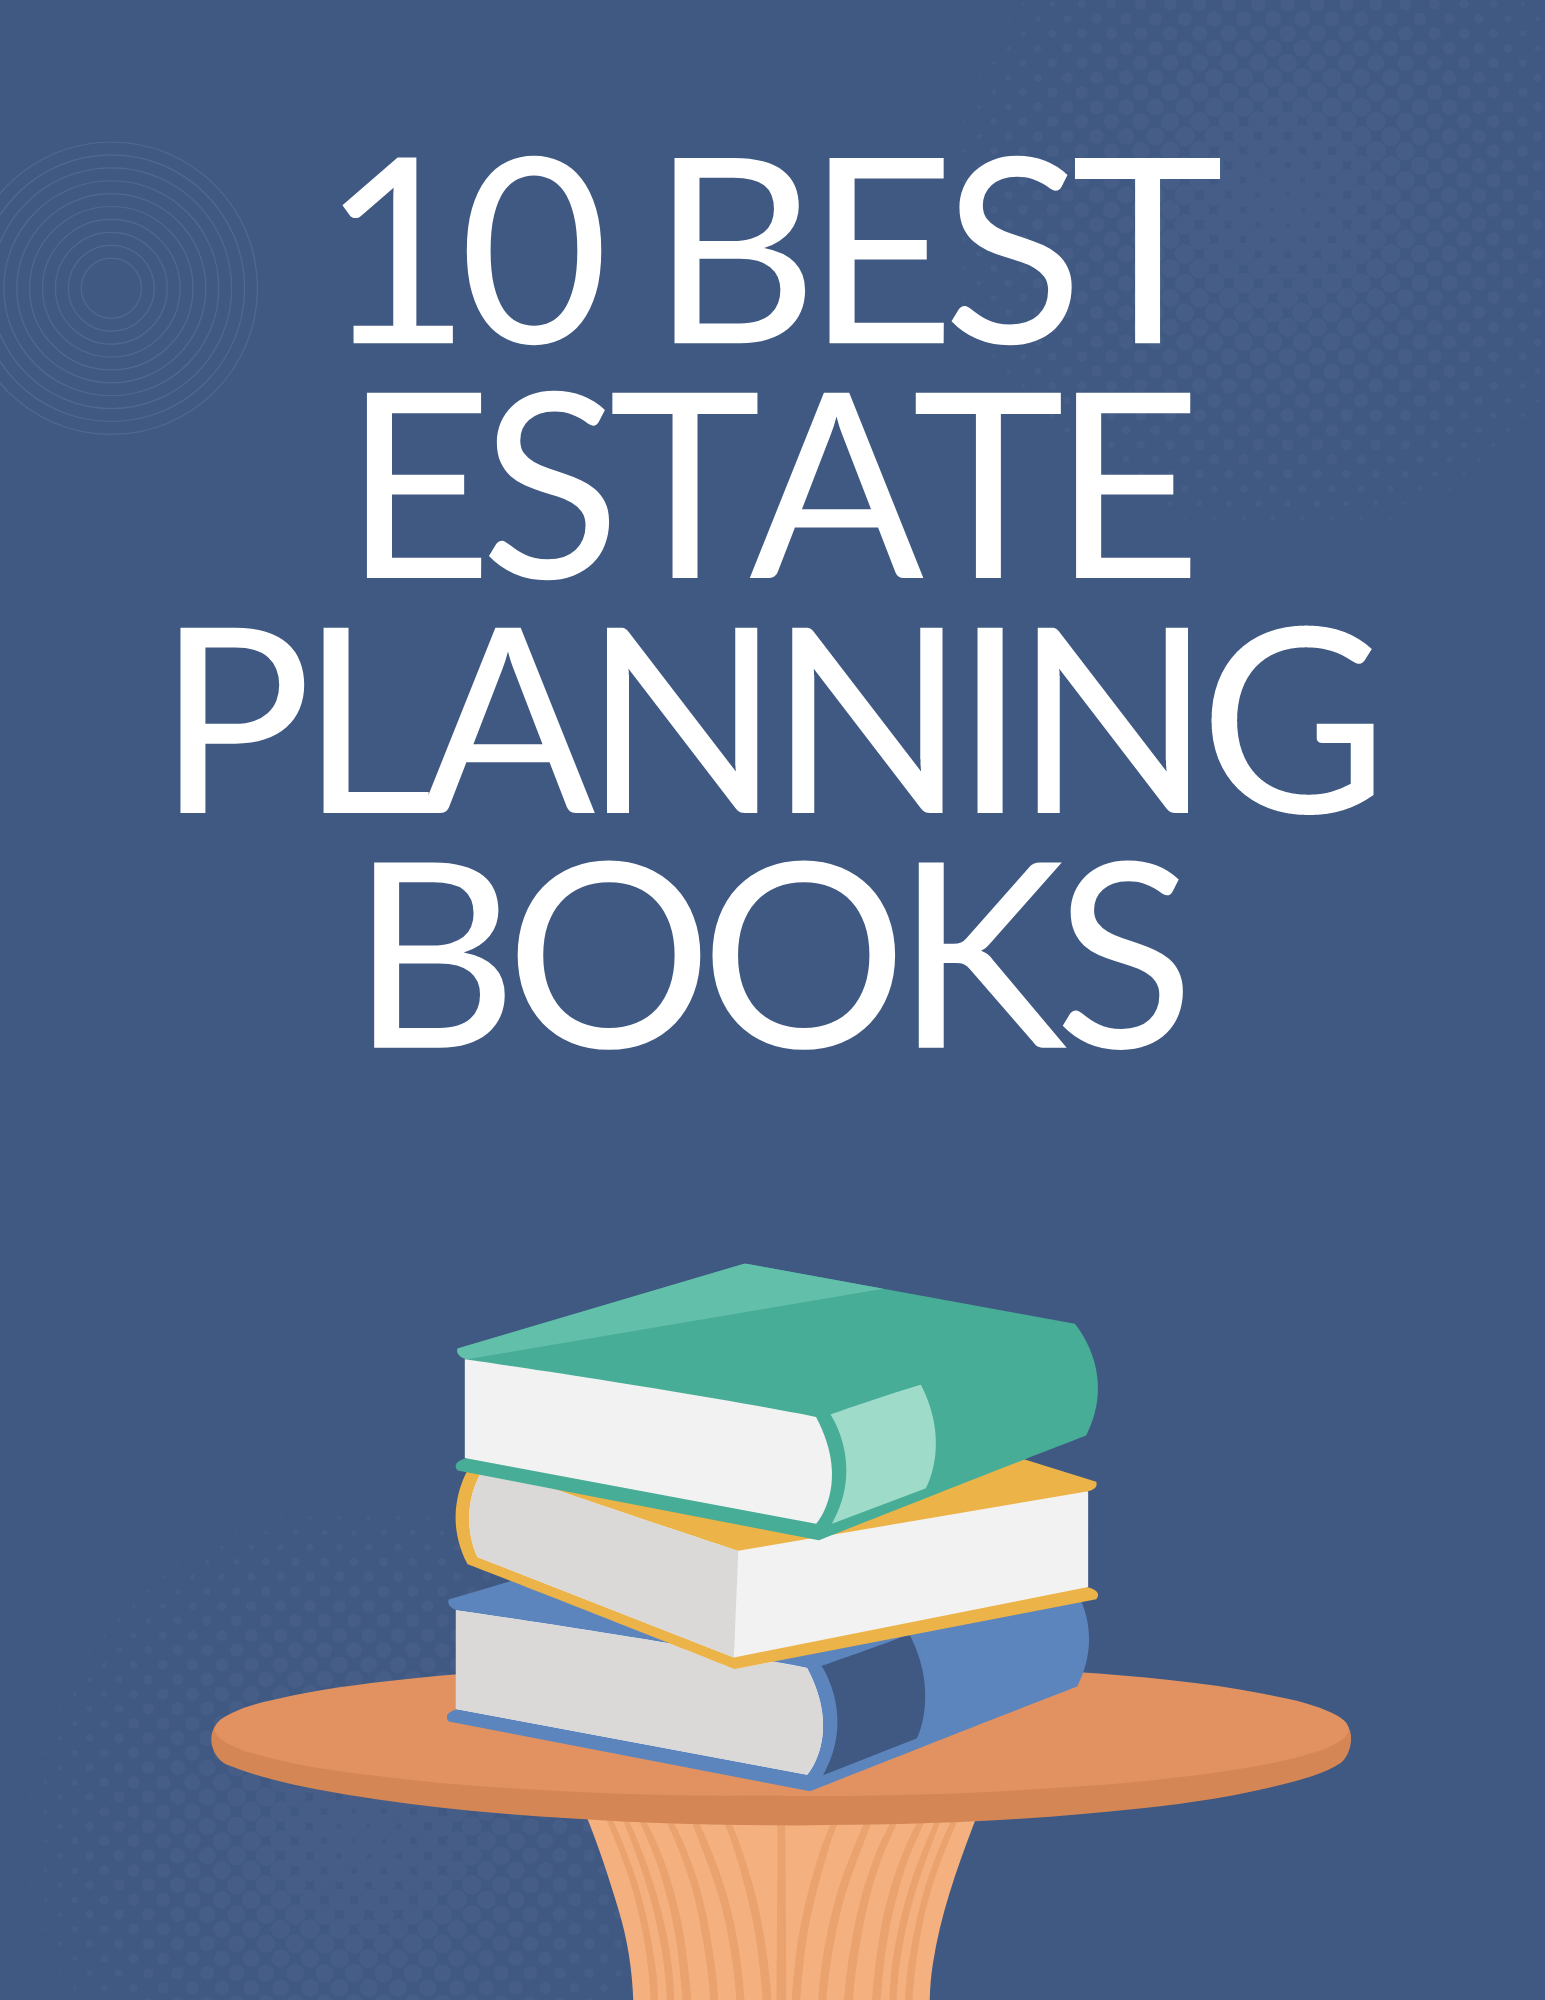 Books on estate planning